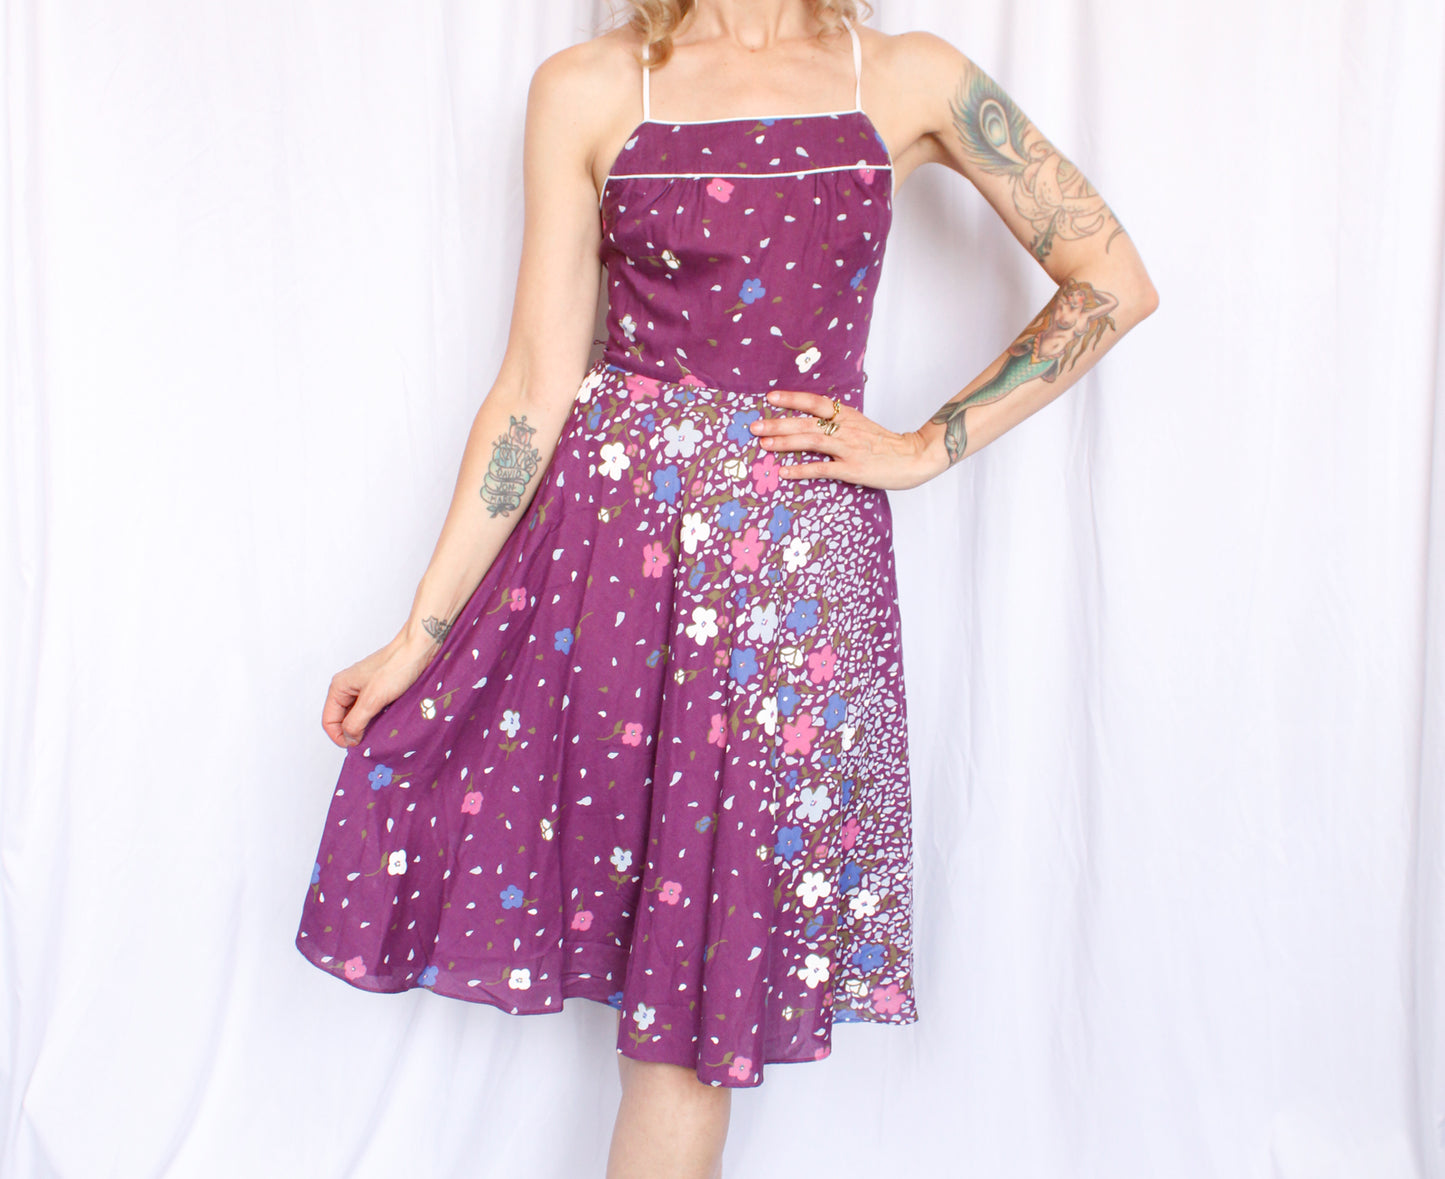 1980s Avon Fashion Floral Purple Dress - Small